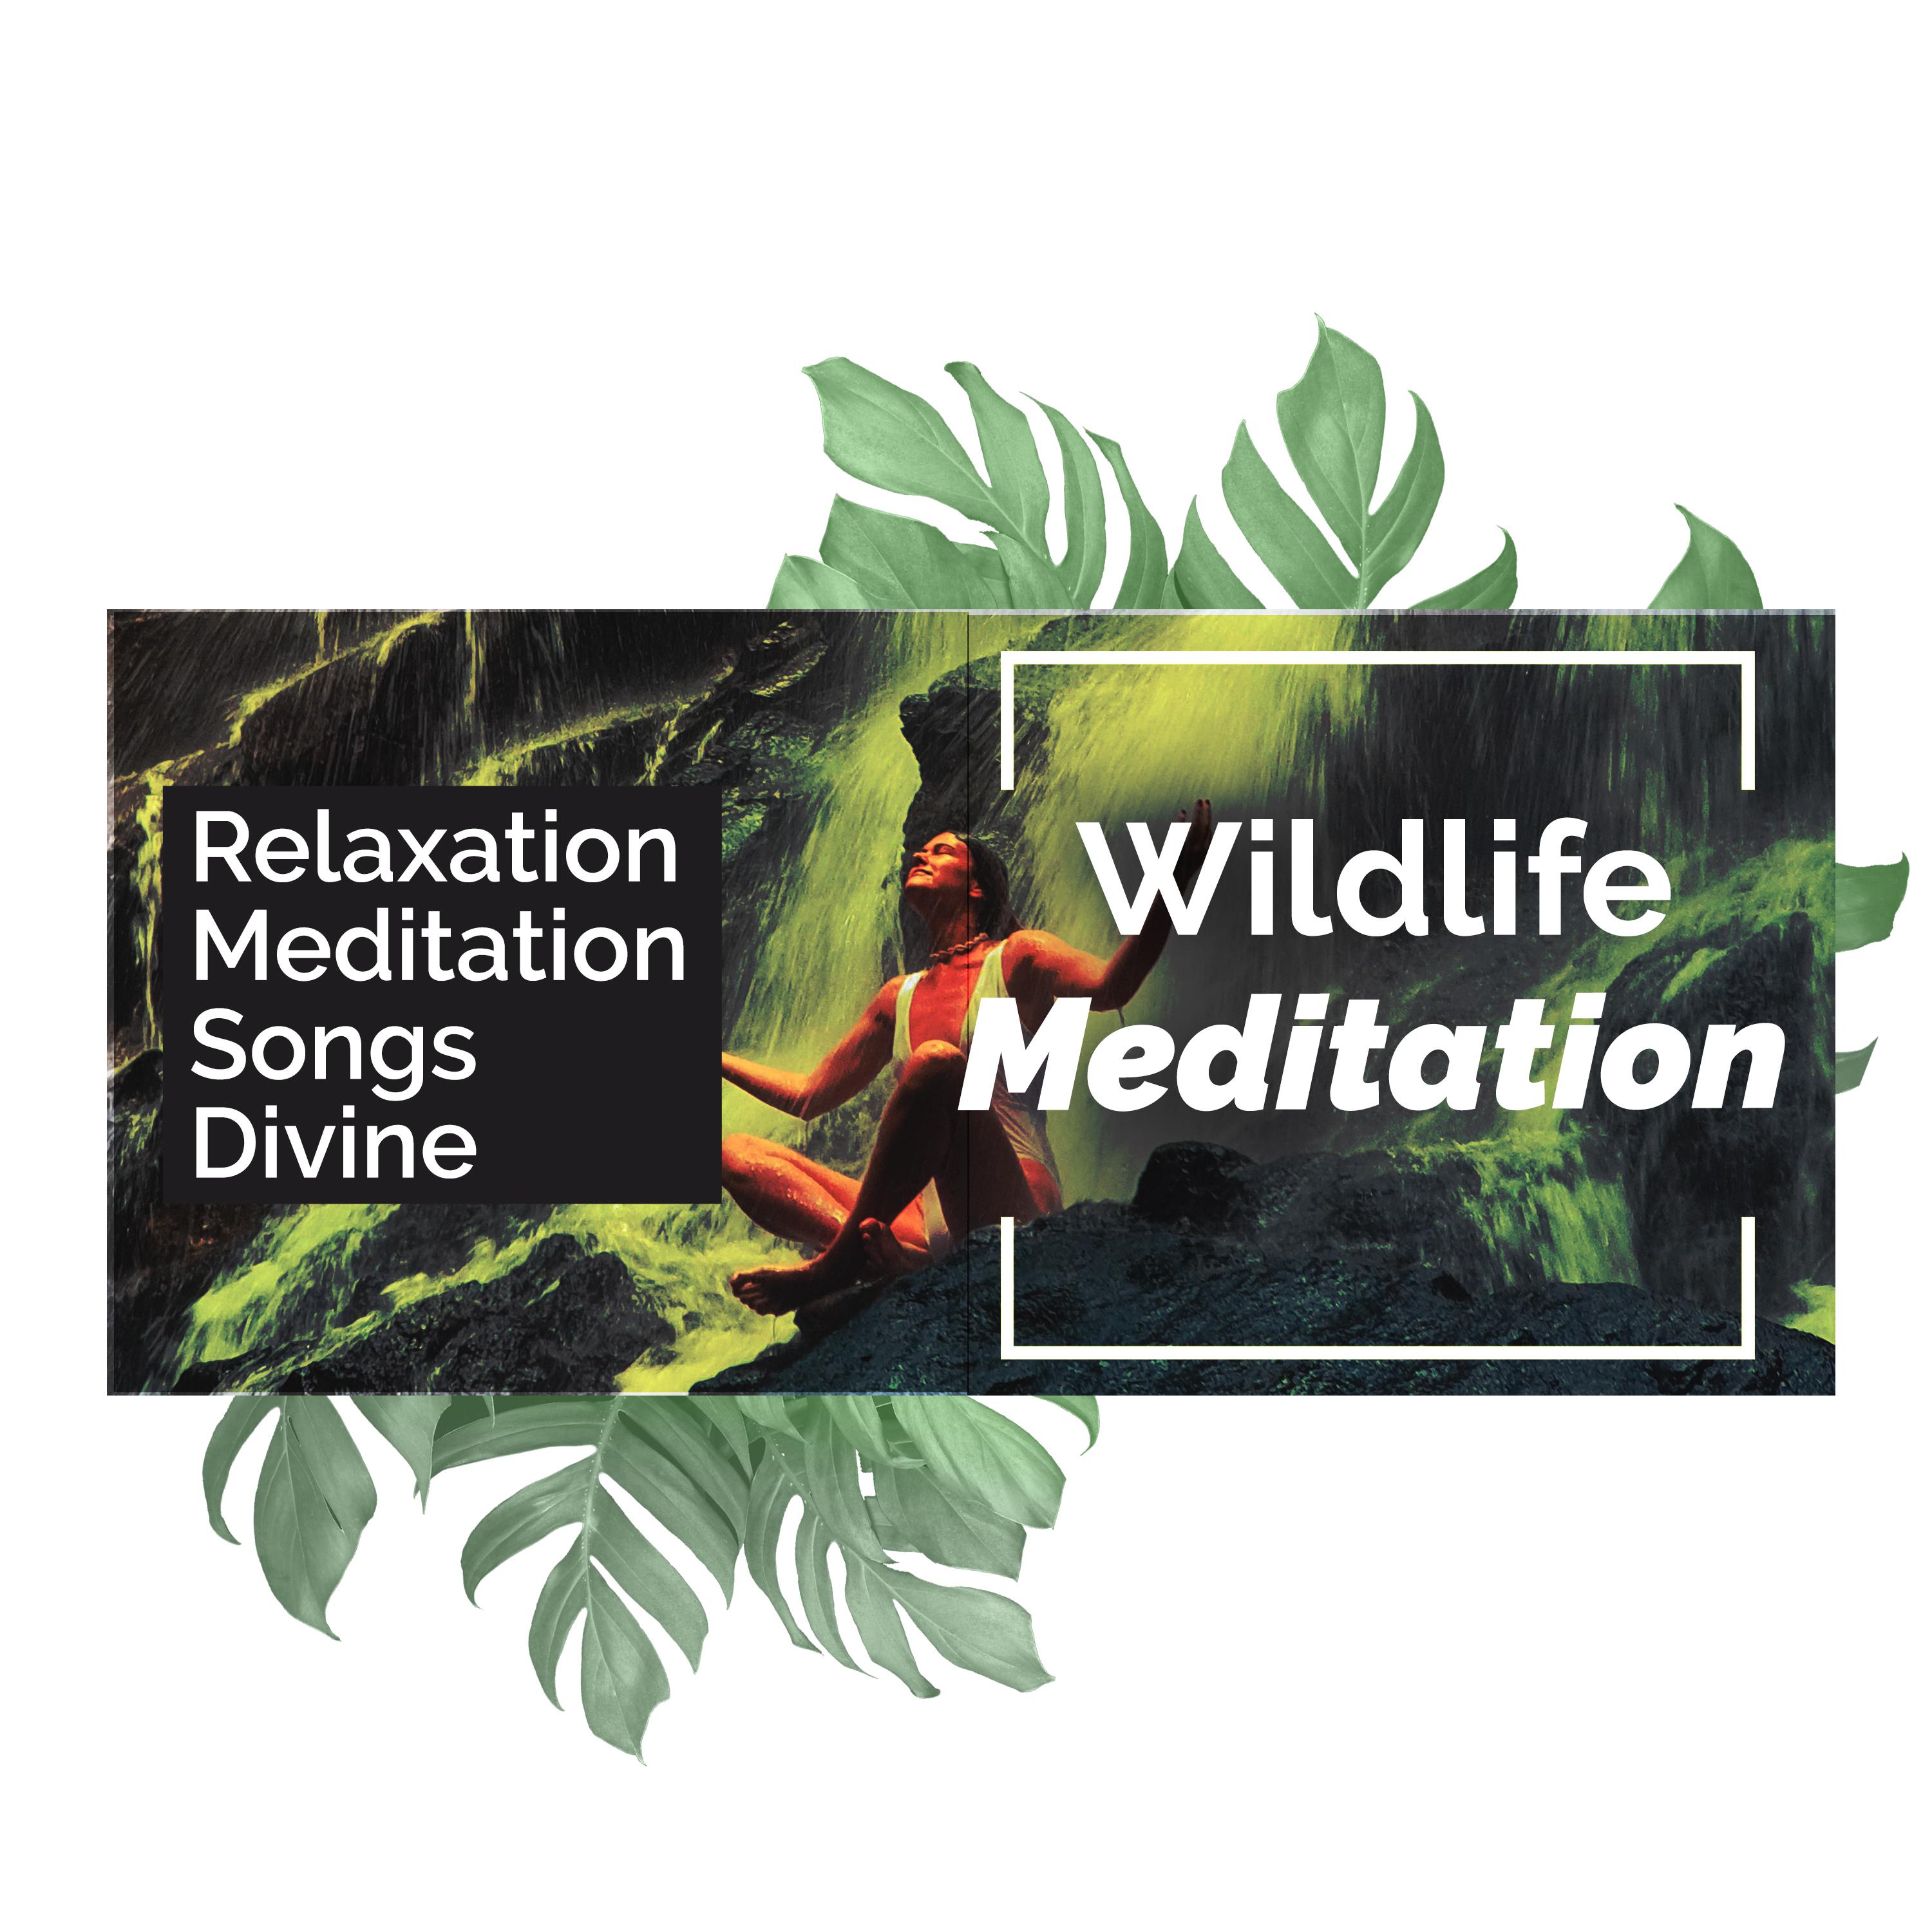 Wildlife Meditation